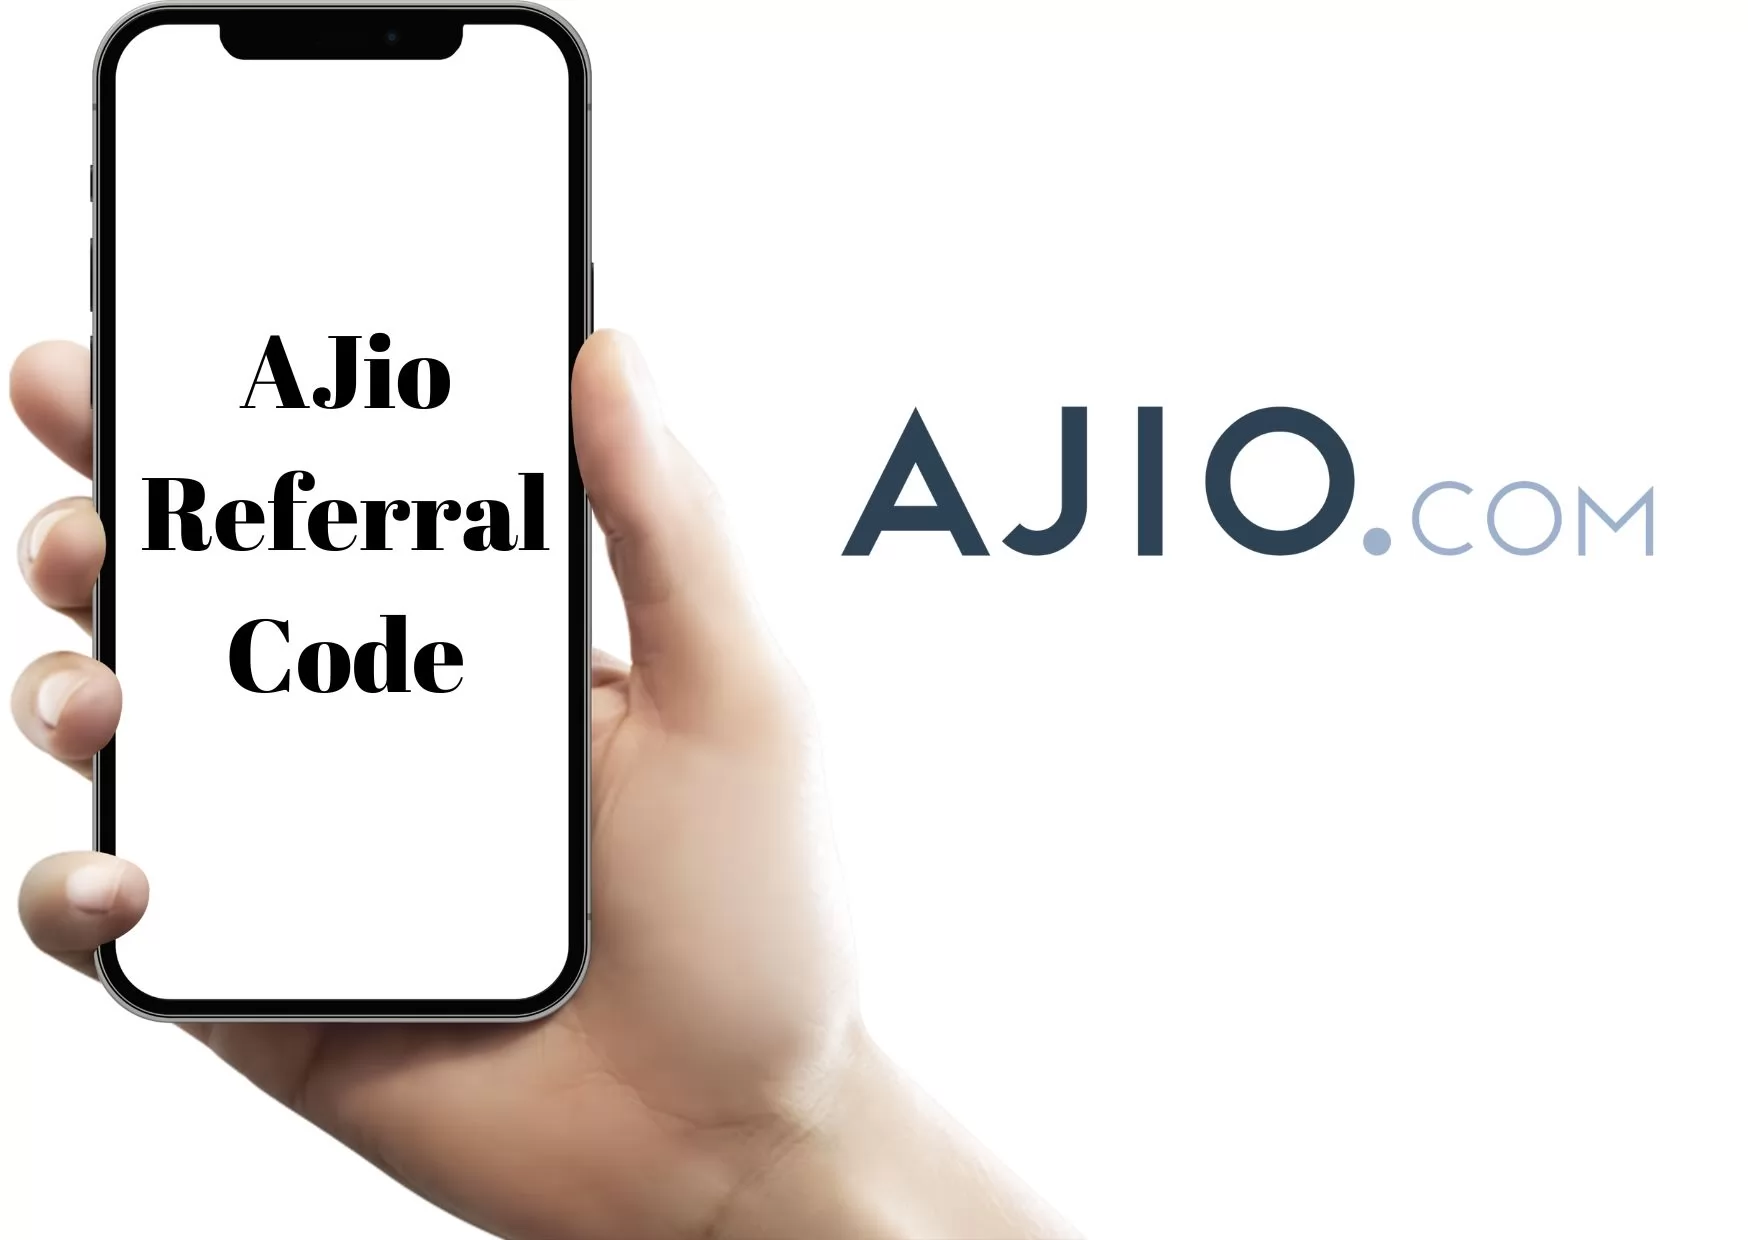 Ajio Invite Code AAMY36QRN Free Rs500 Cash Referral Code